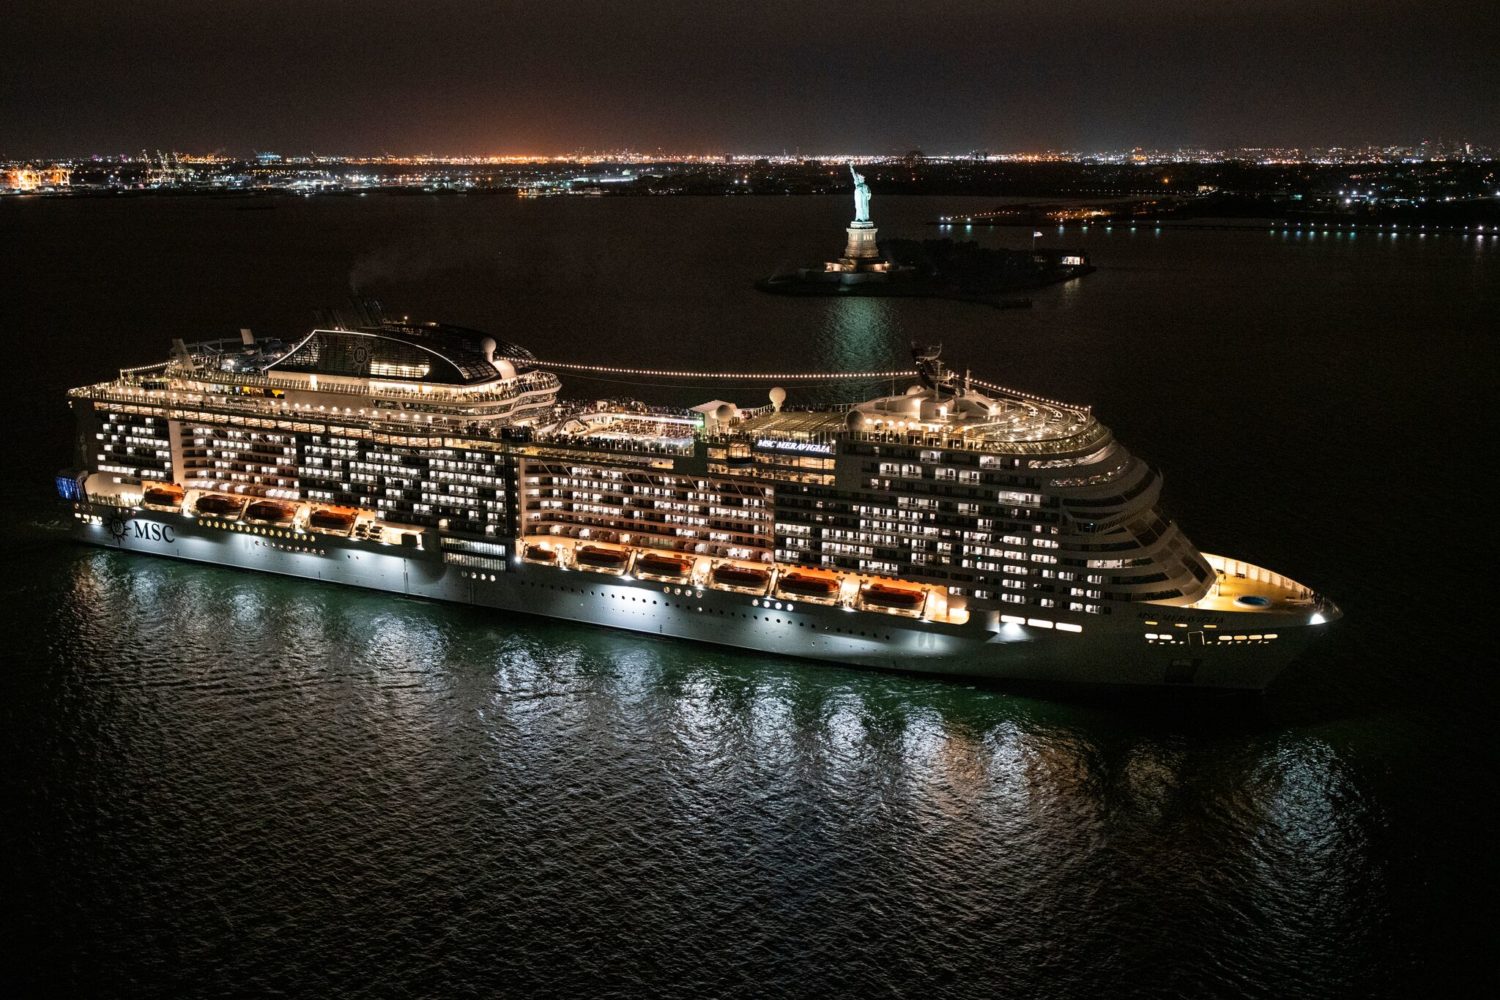 MSC Meraviglia Largest Cruise Ship to Visit New York City